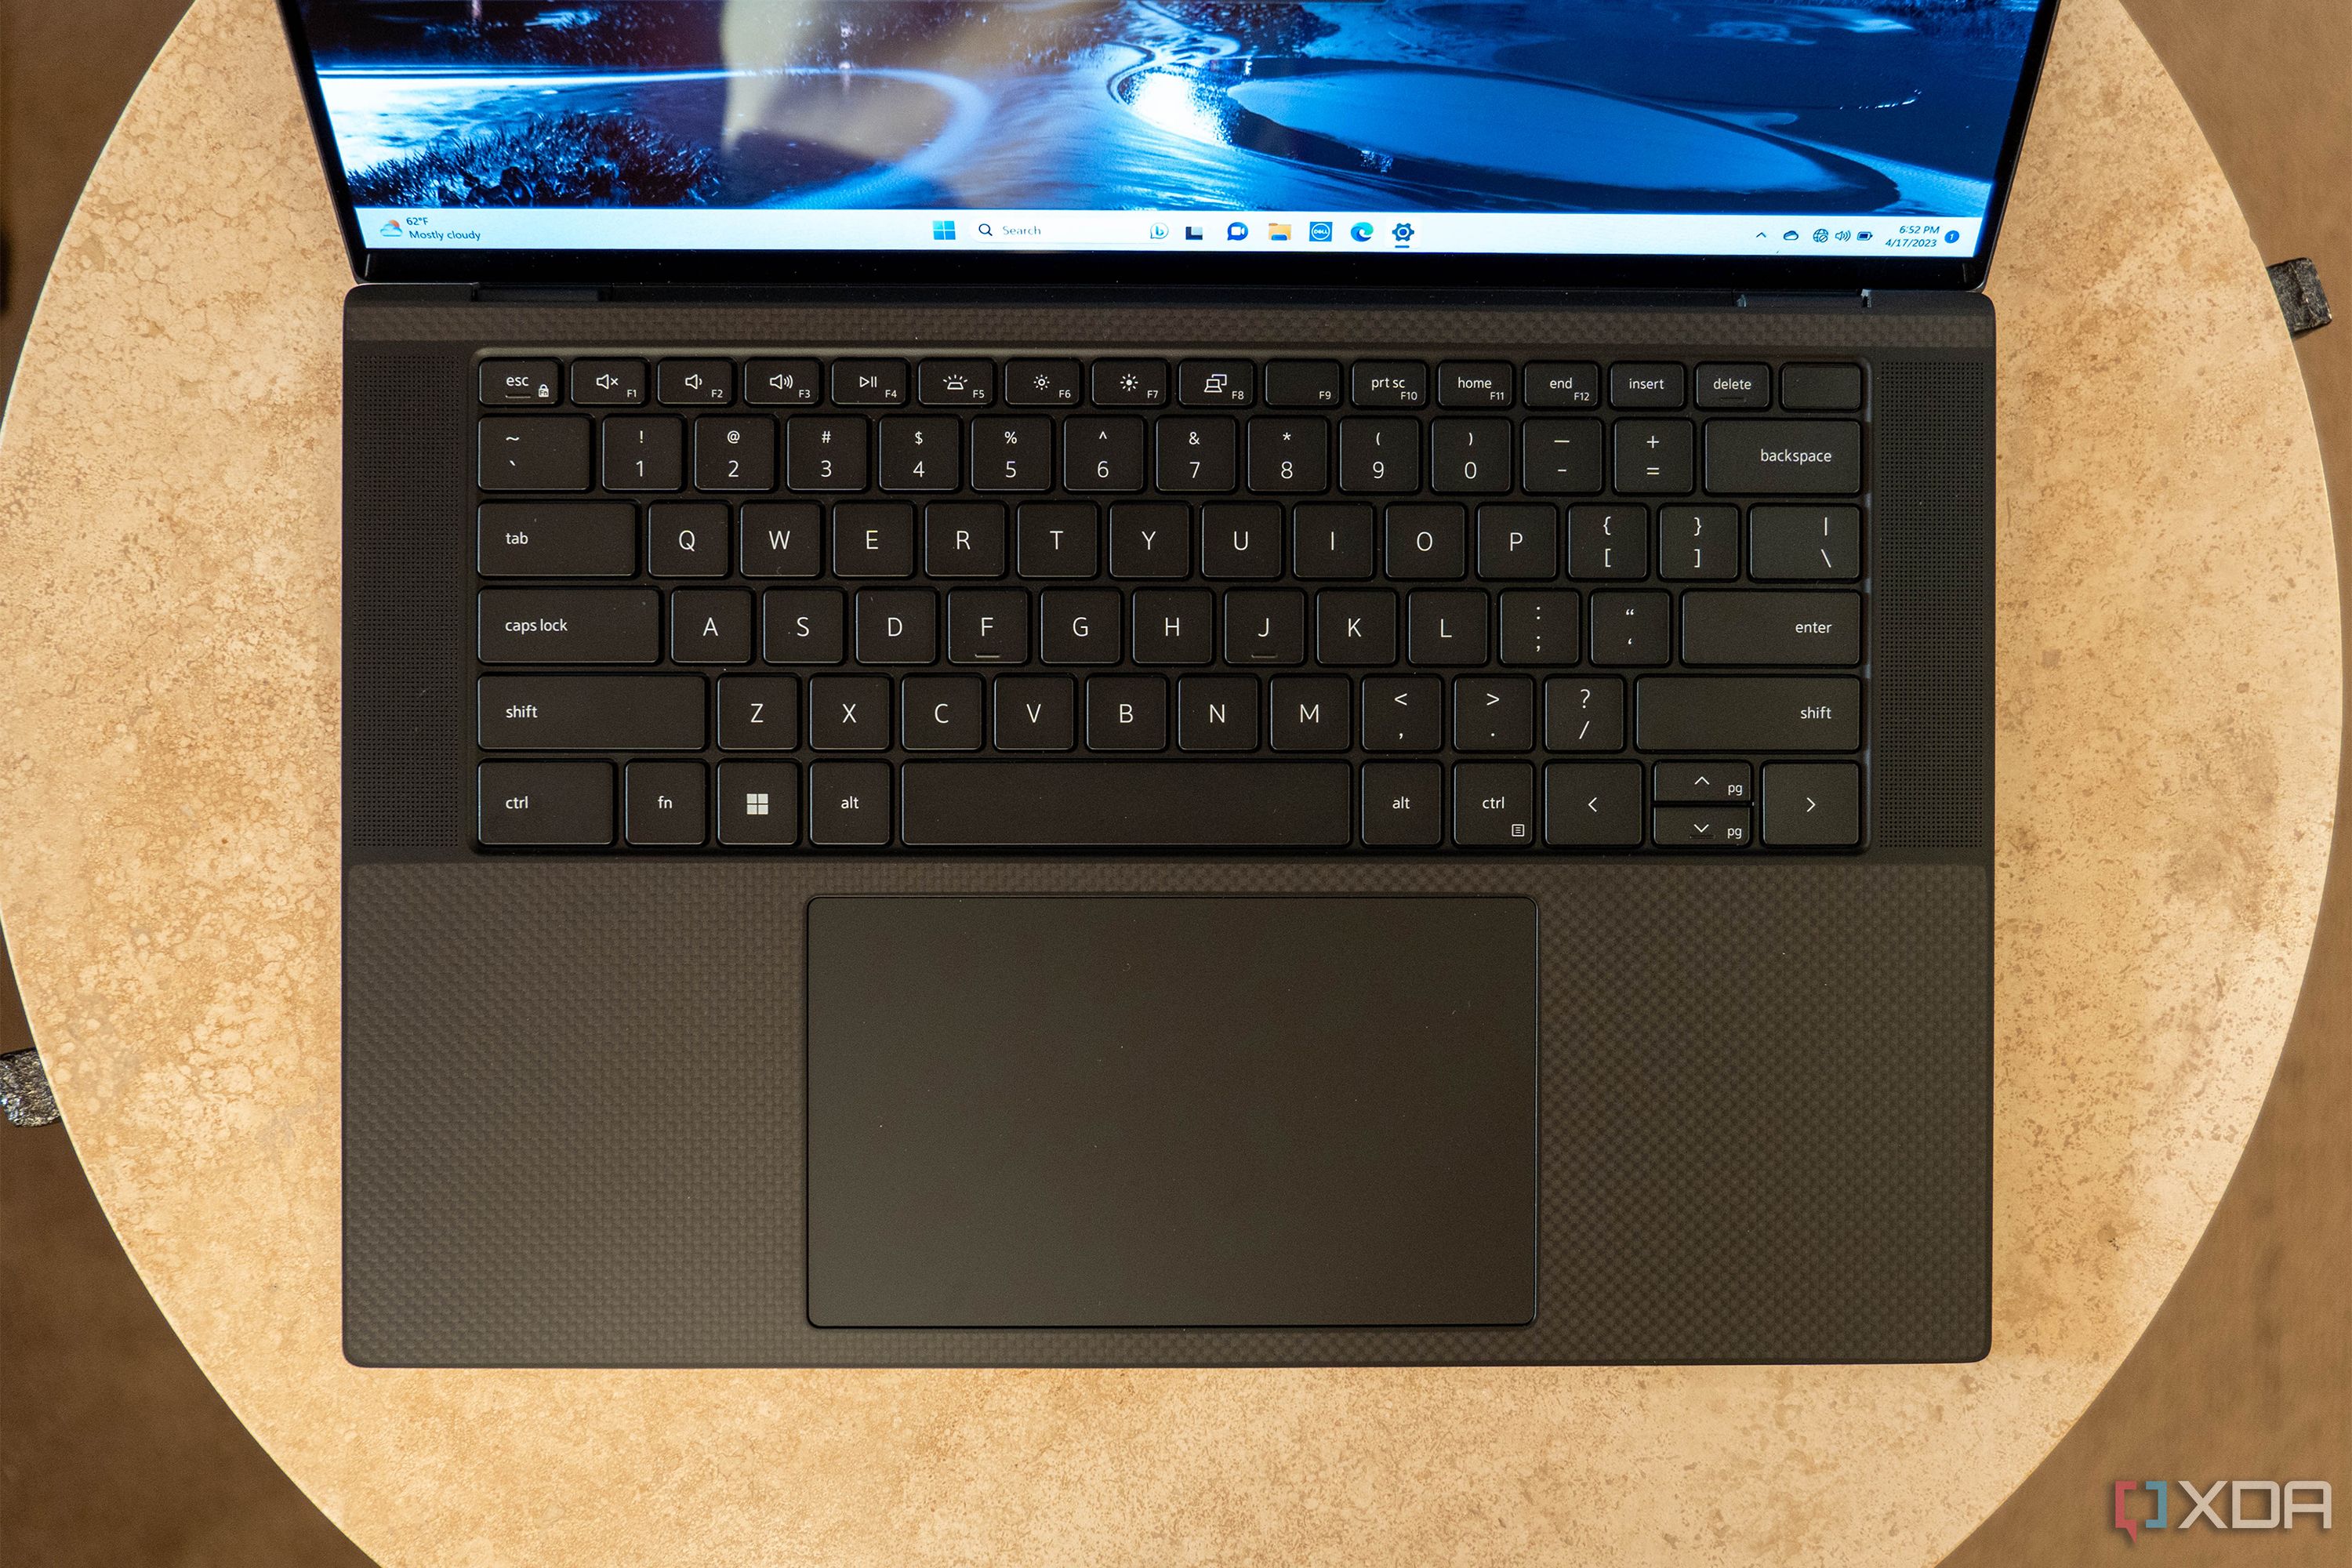 Top-down view of a black laptop keyboard